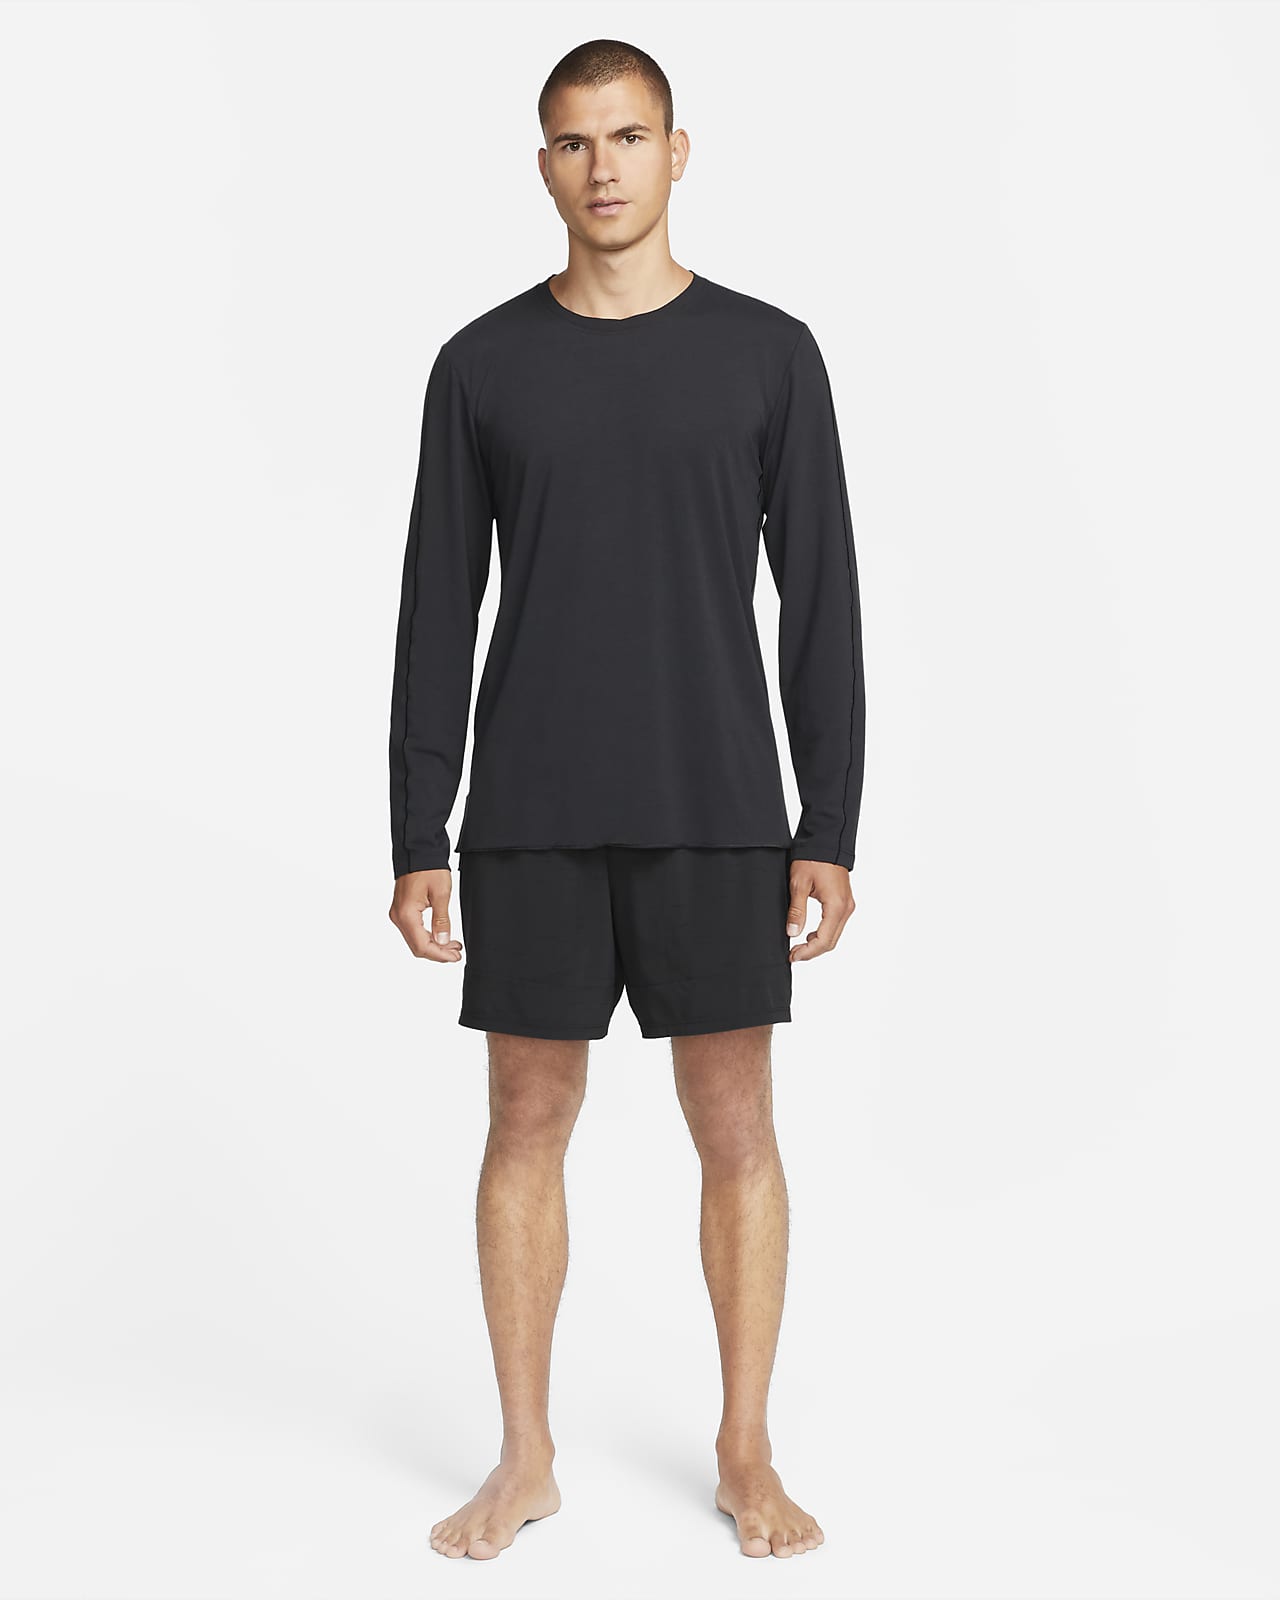 Nike Yoga Dri-FIT Men's Short-Sleeve Top - Asport